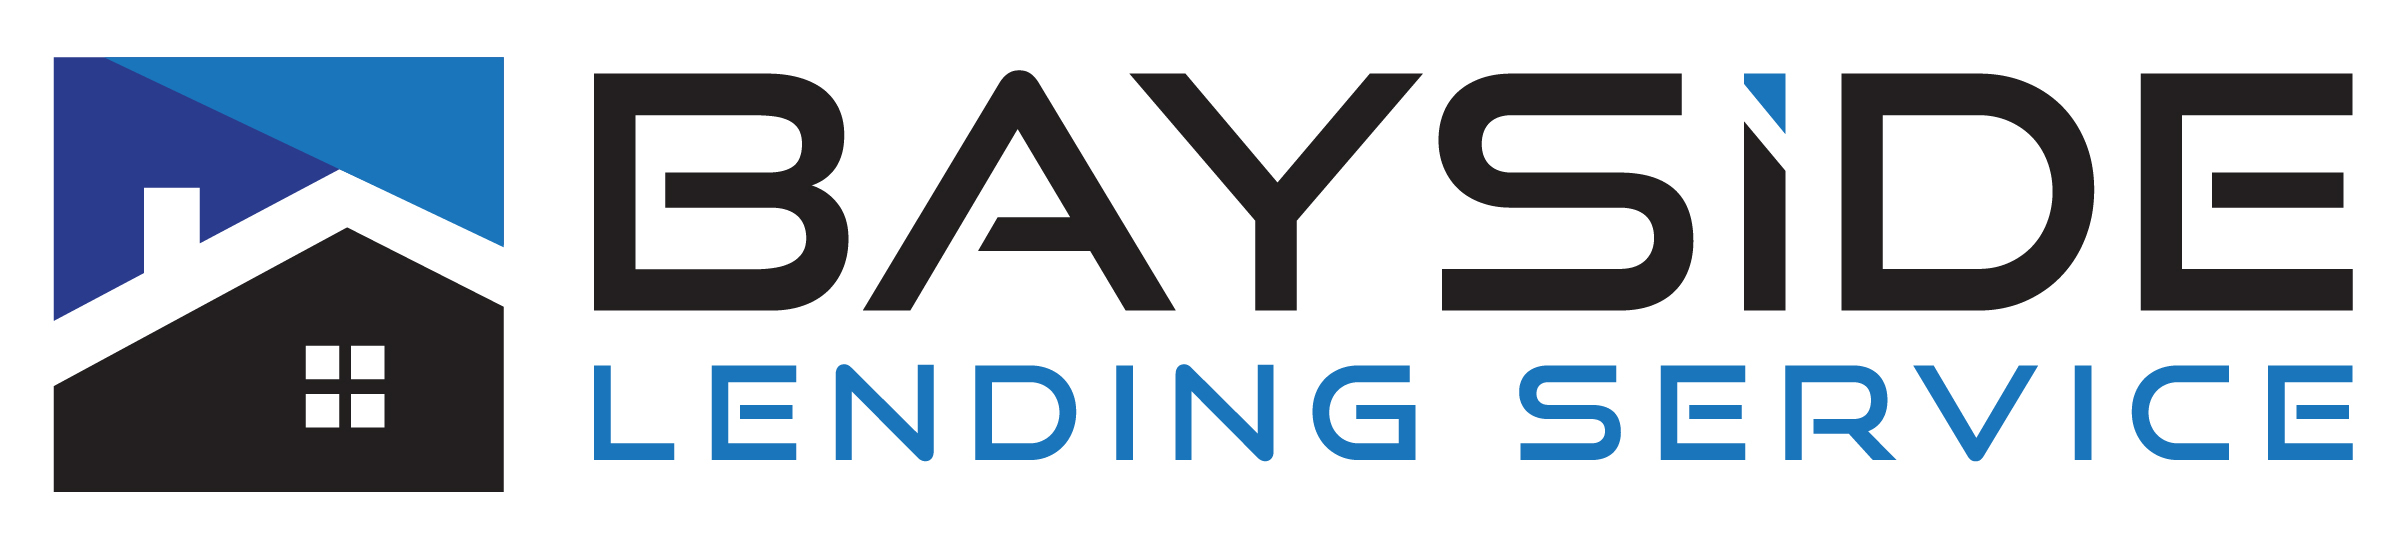 Bayside Lending Services